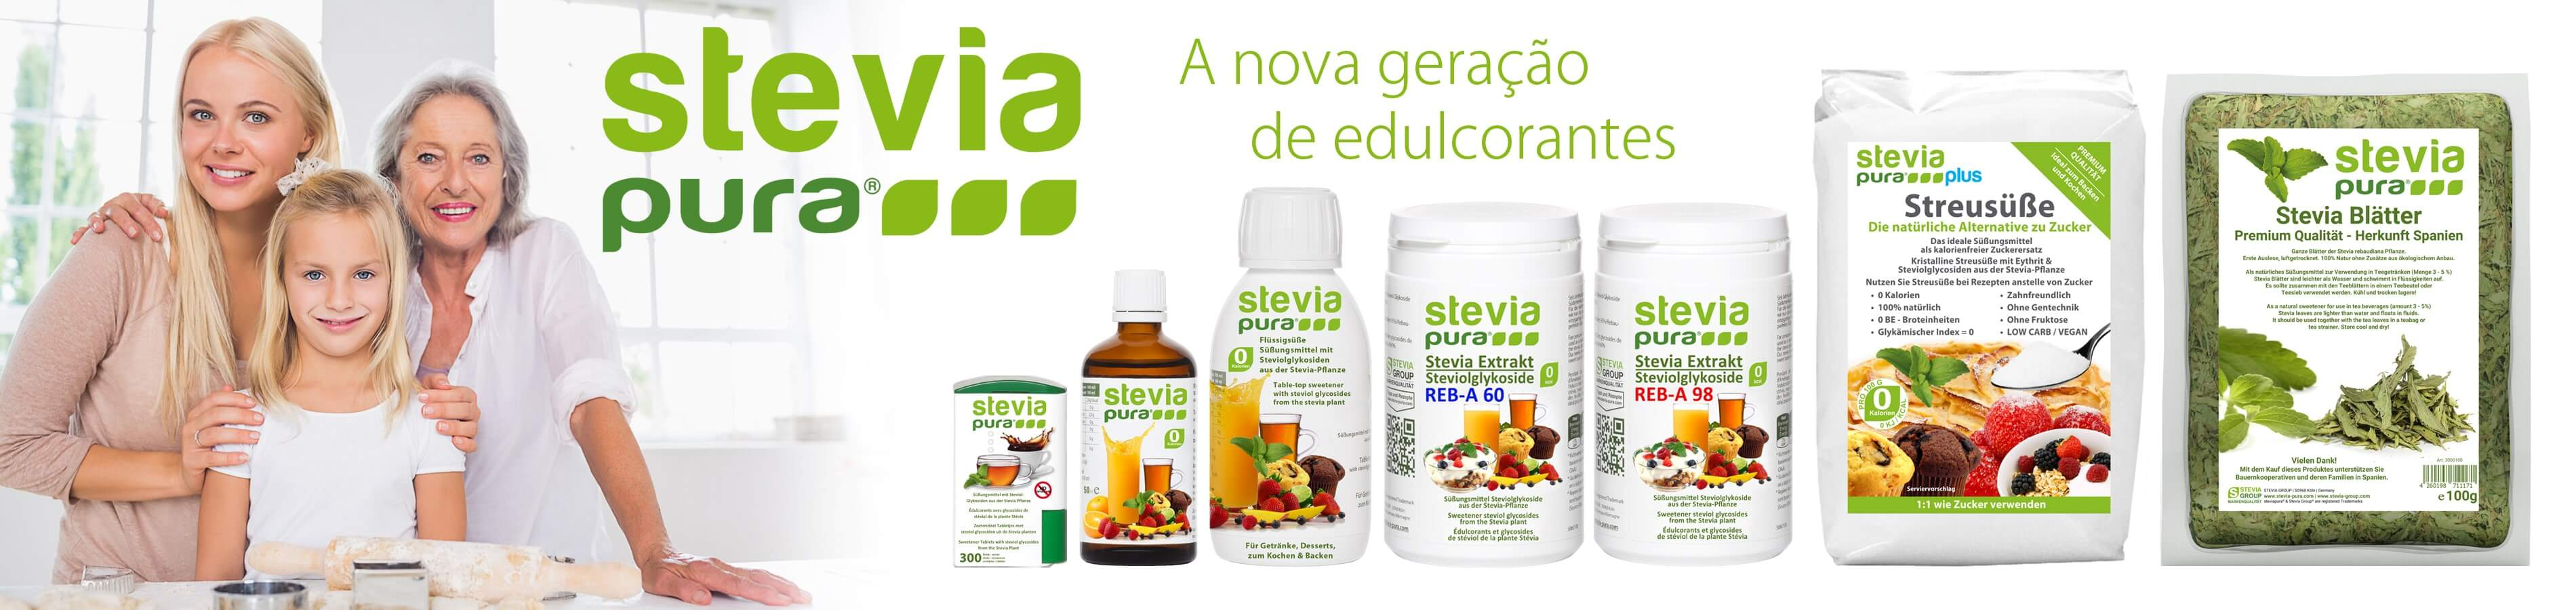 Comprar Stevia | Edulcorante de alta calidad steviapura® procedente del extracto de la planta de la Stevia